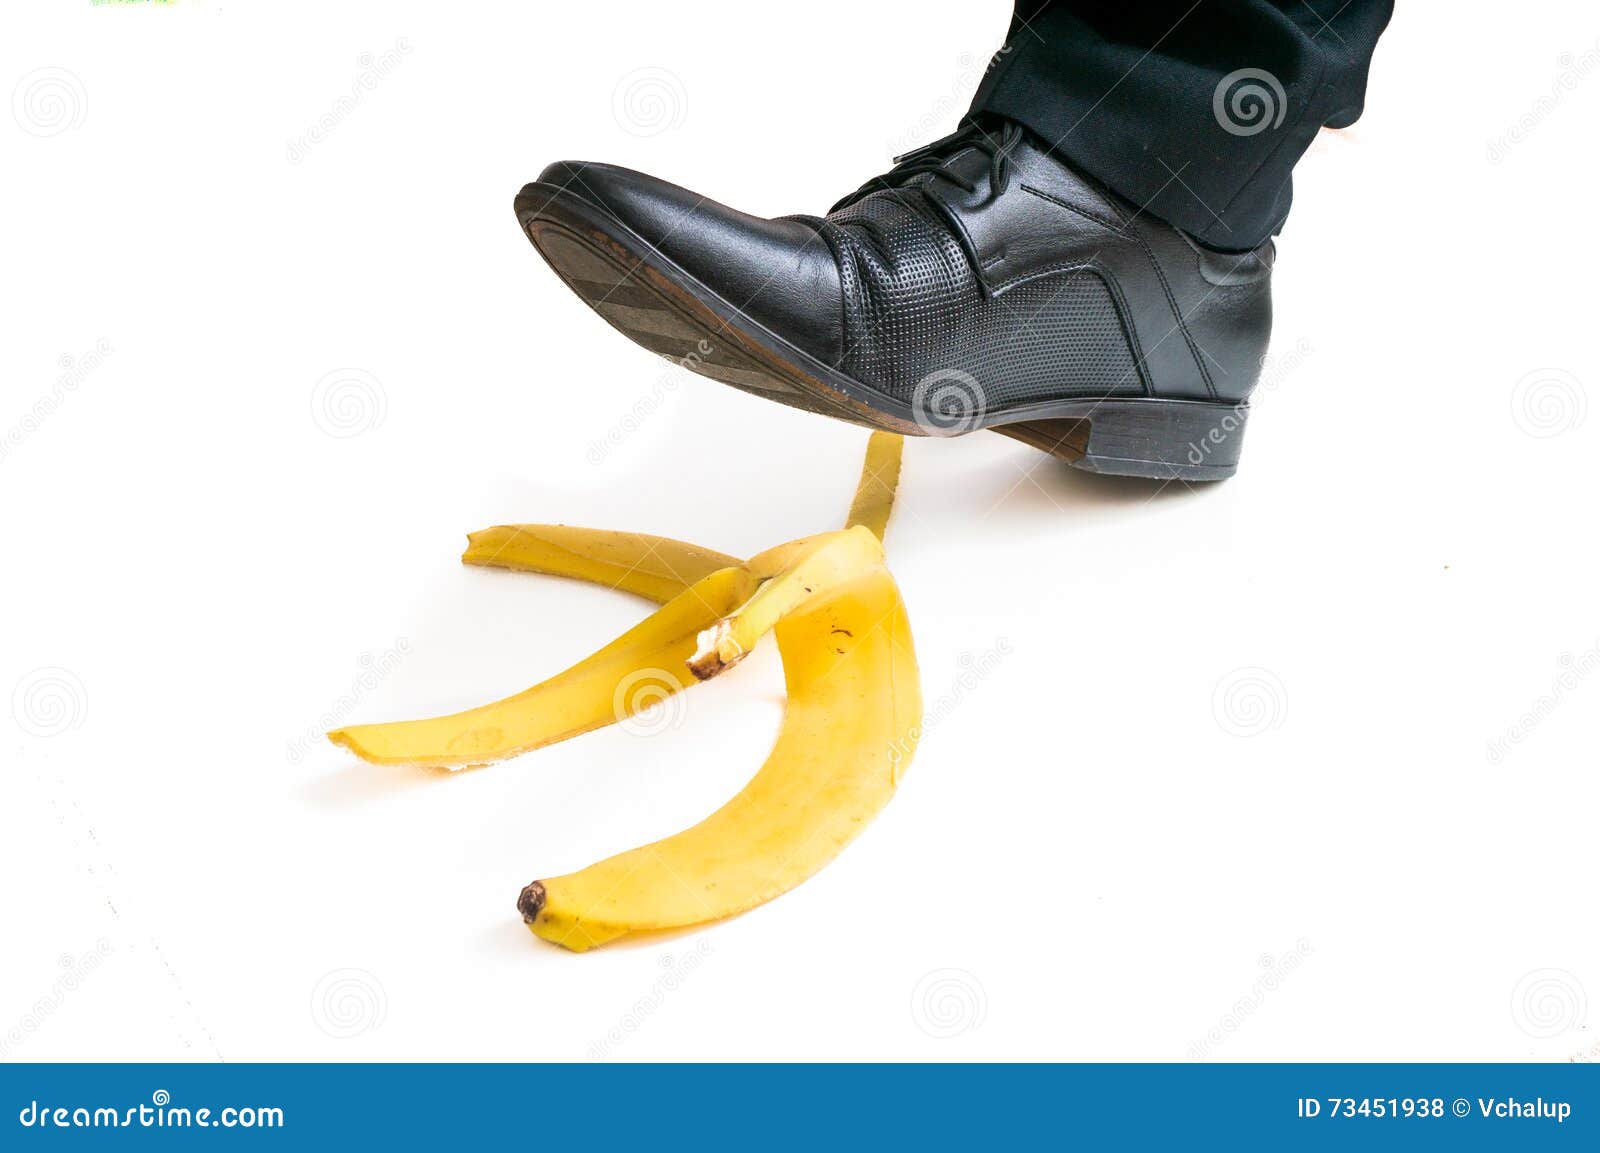 walking businessman is going to slip on banana peel